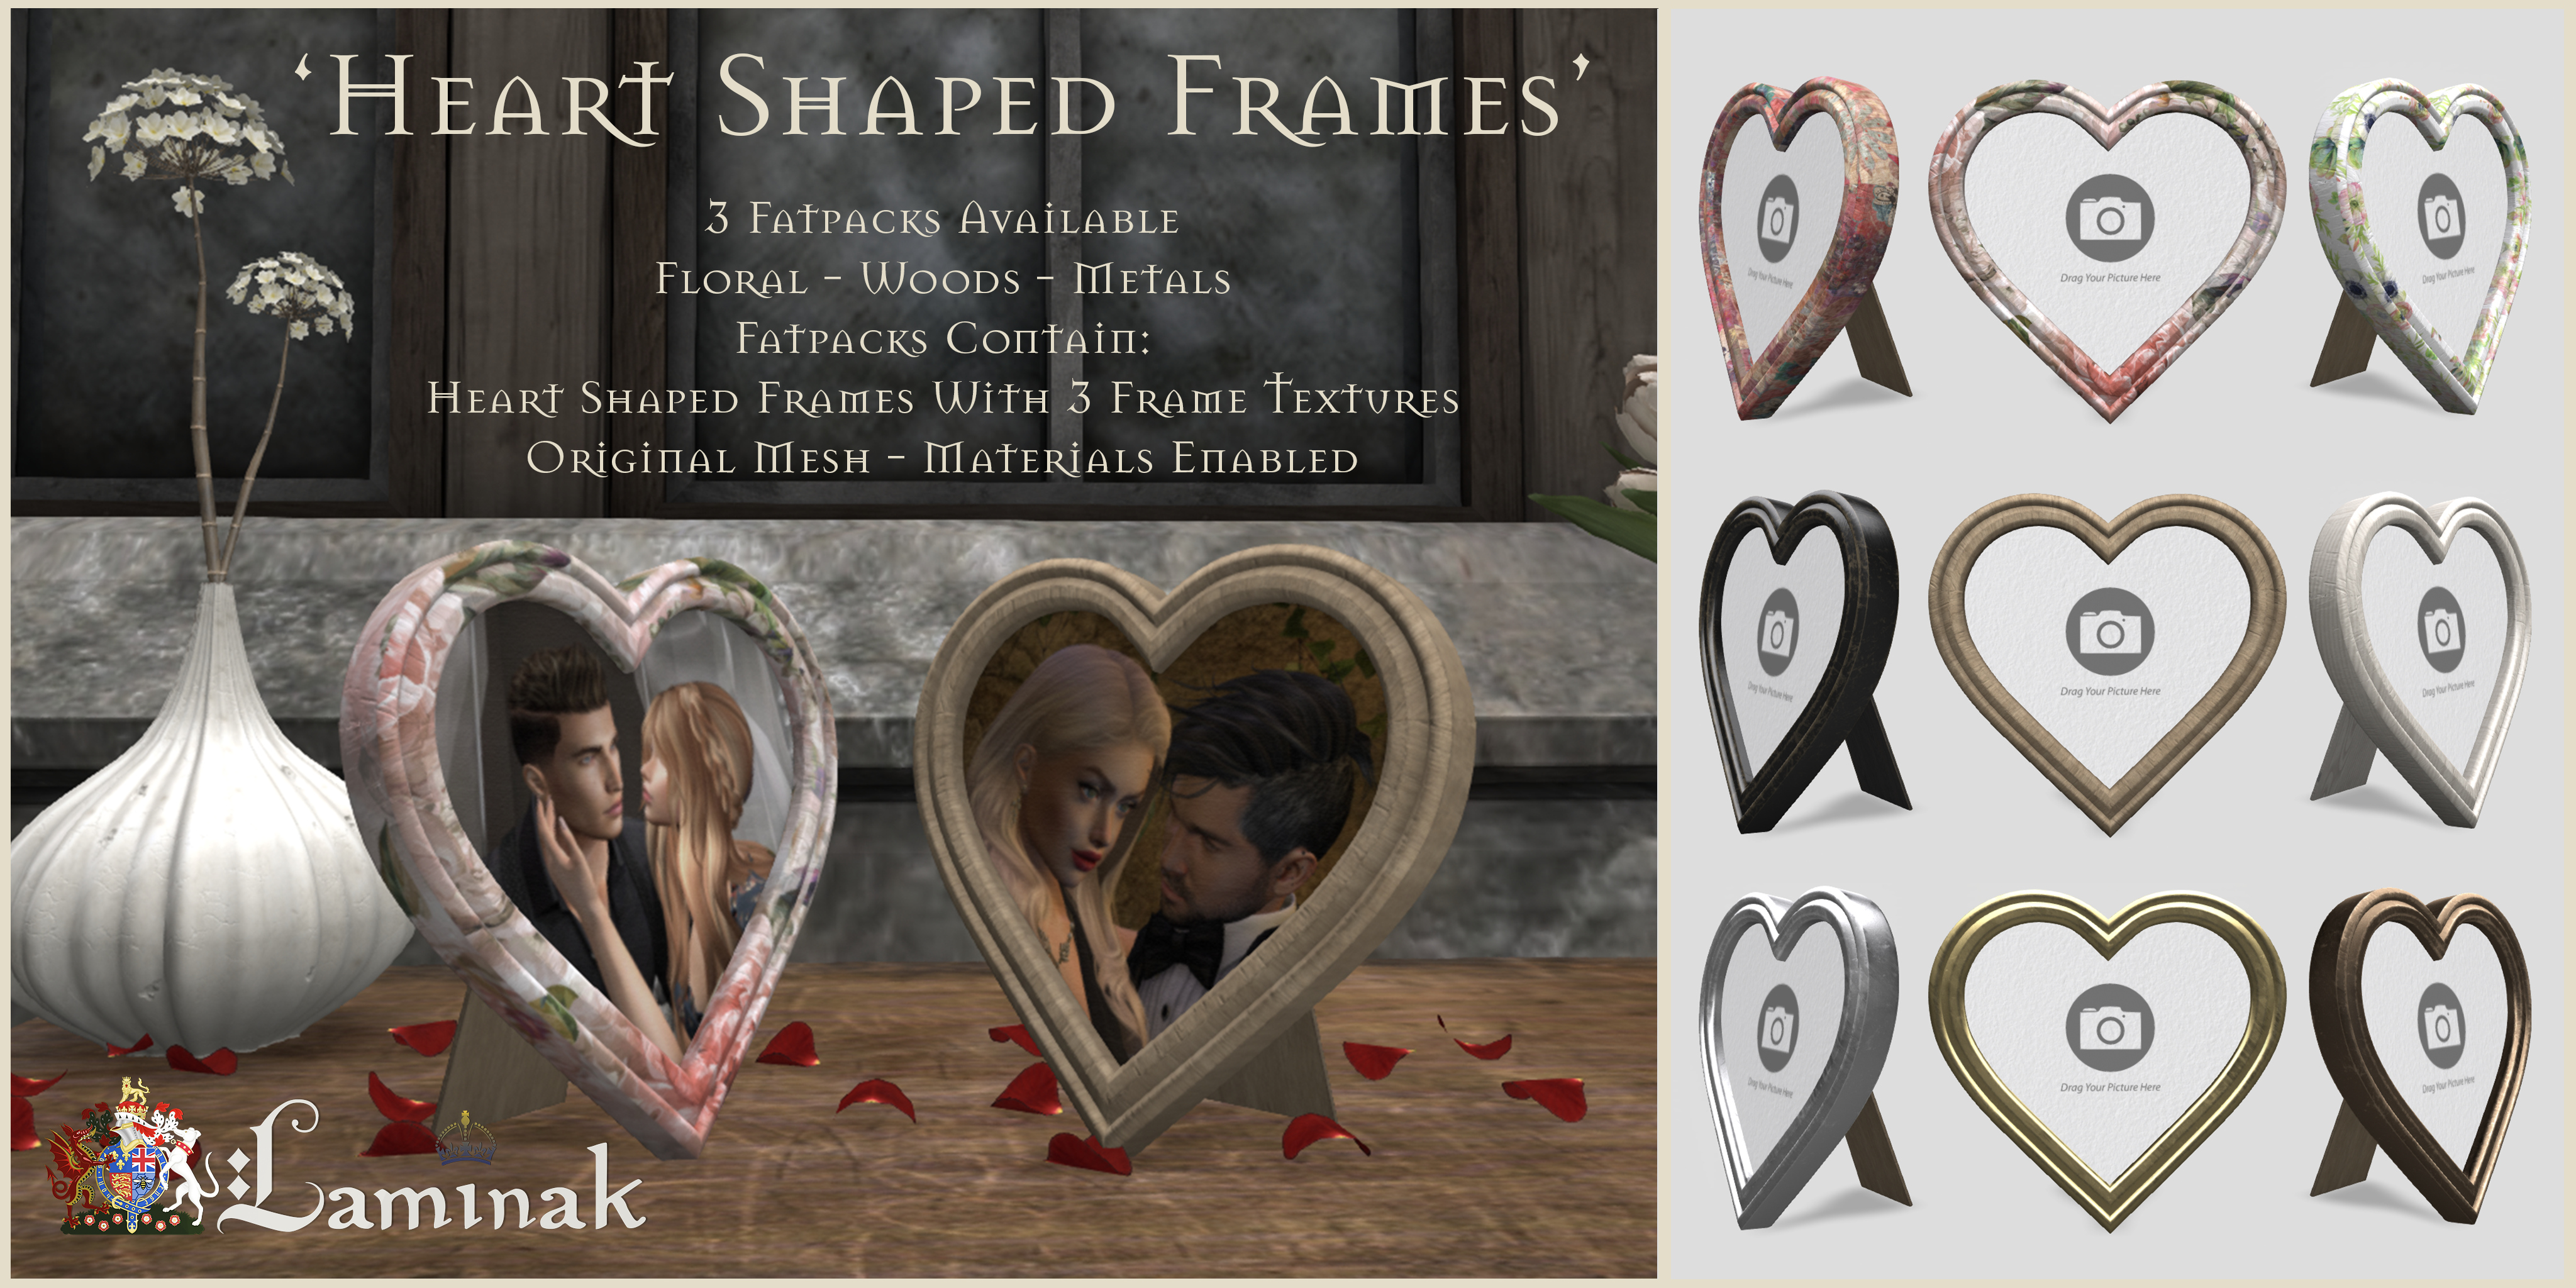 Laminak – Heart Shaped Frames